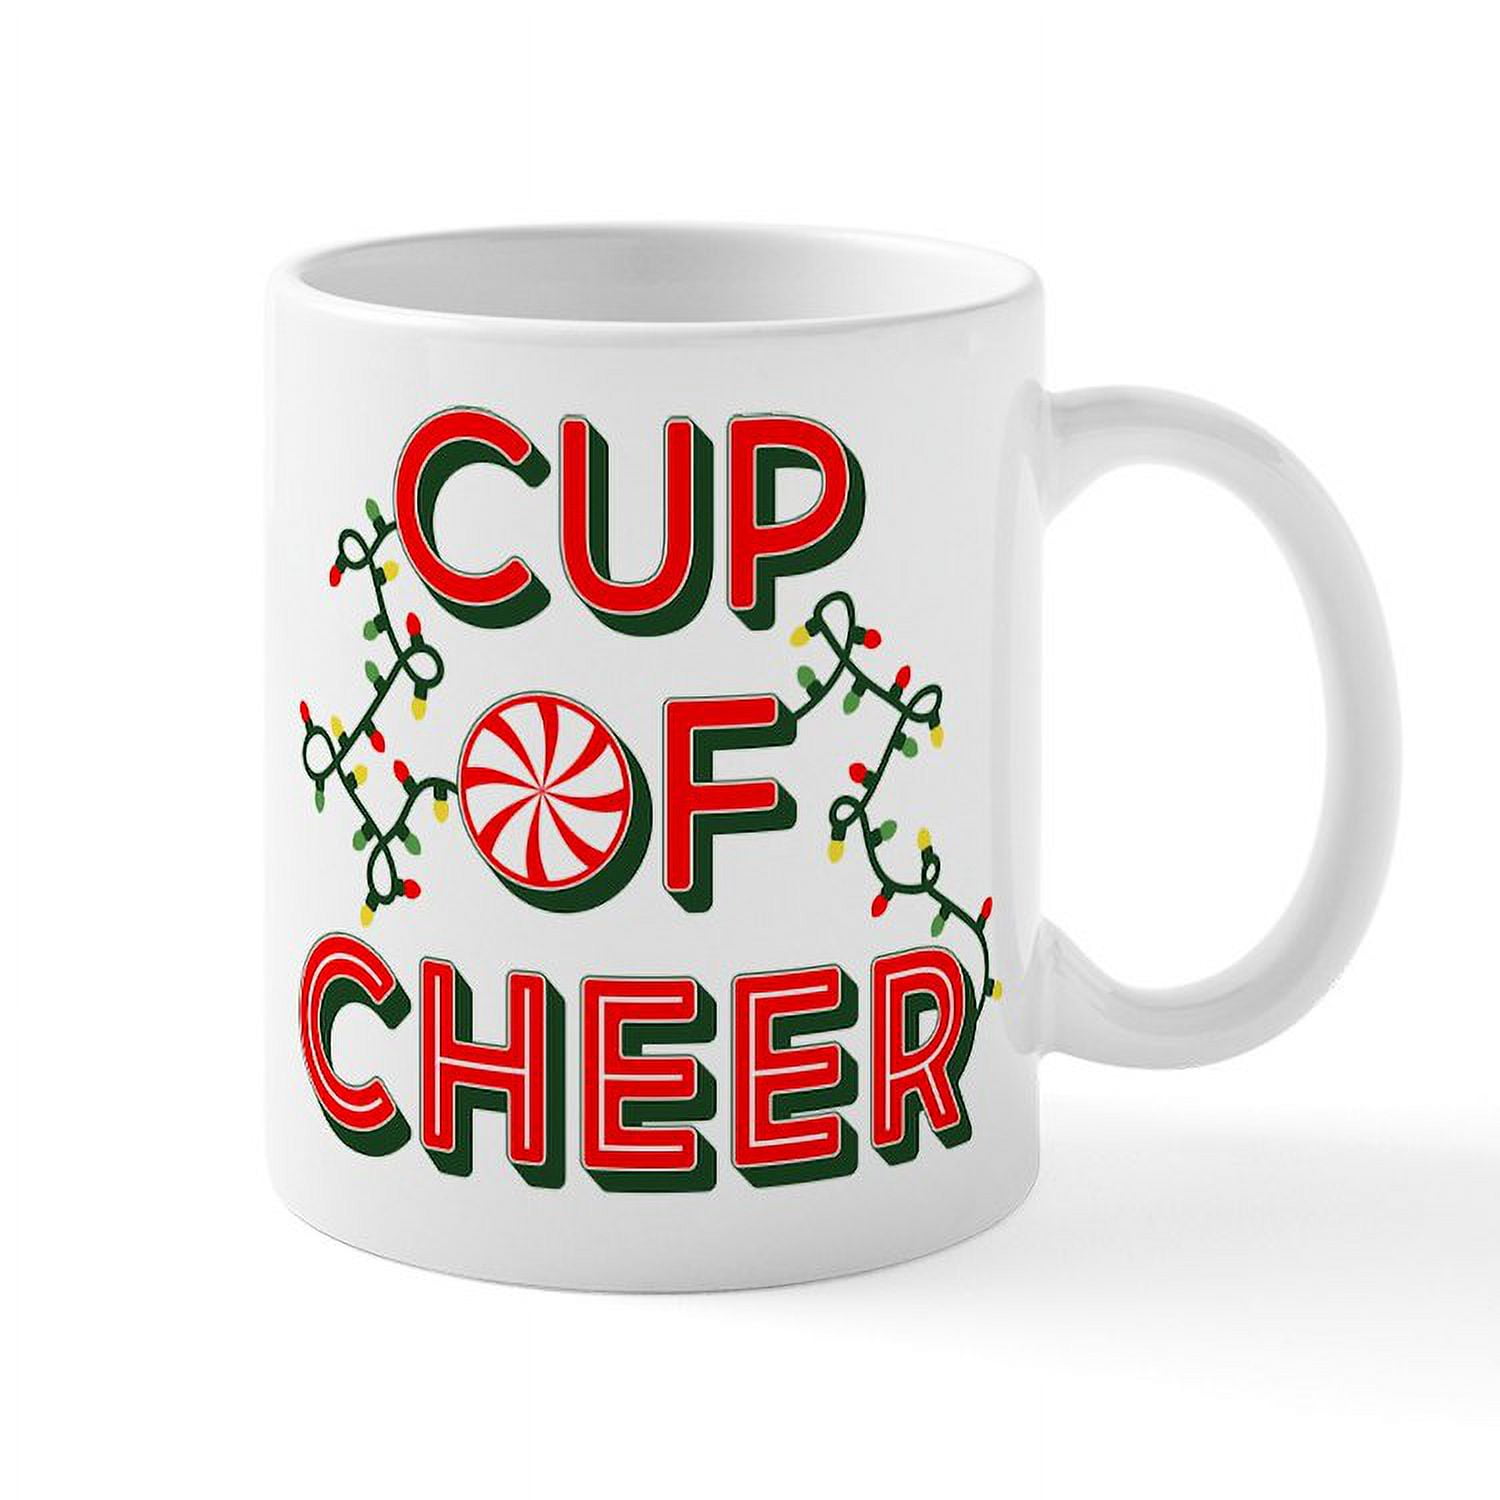 CafePress - MLP Twilight Sparkle Seriously Psyched! Mug - 11 oz Ceramic Mug  - Novelty Coffee Tea Cup 